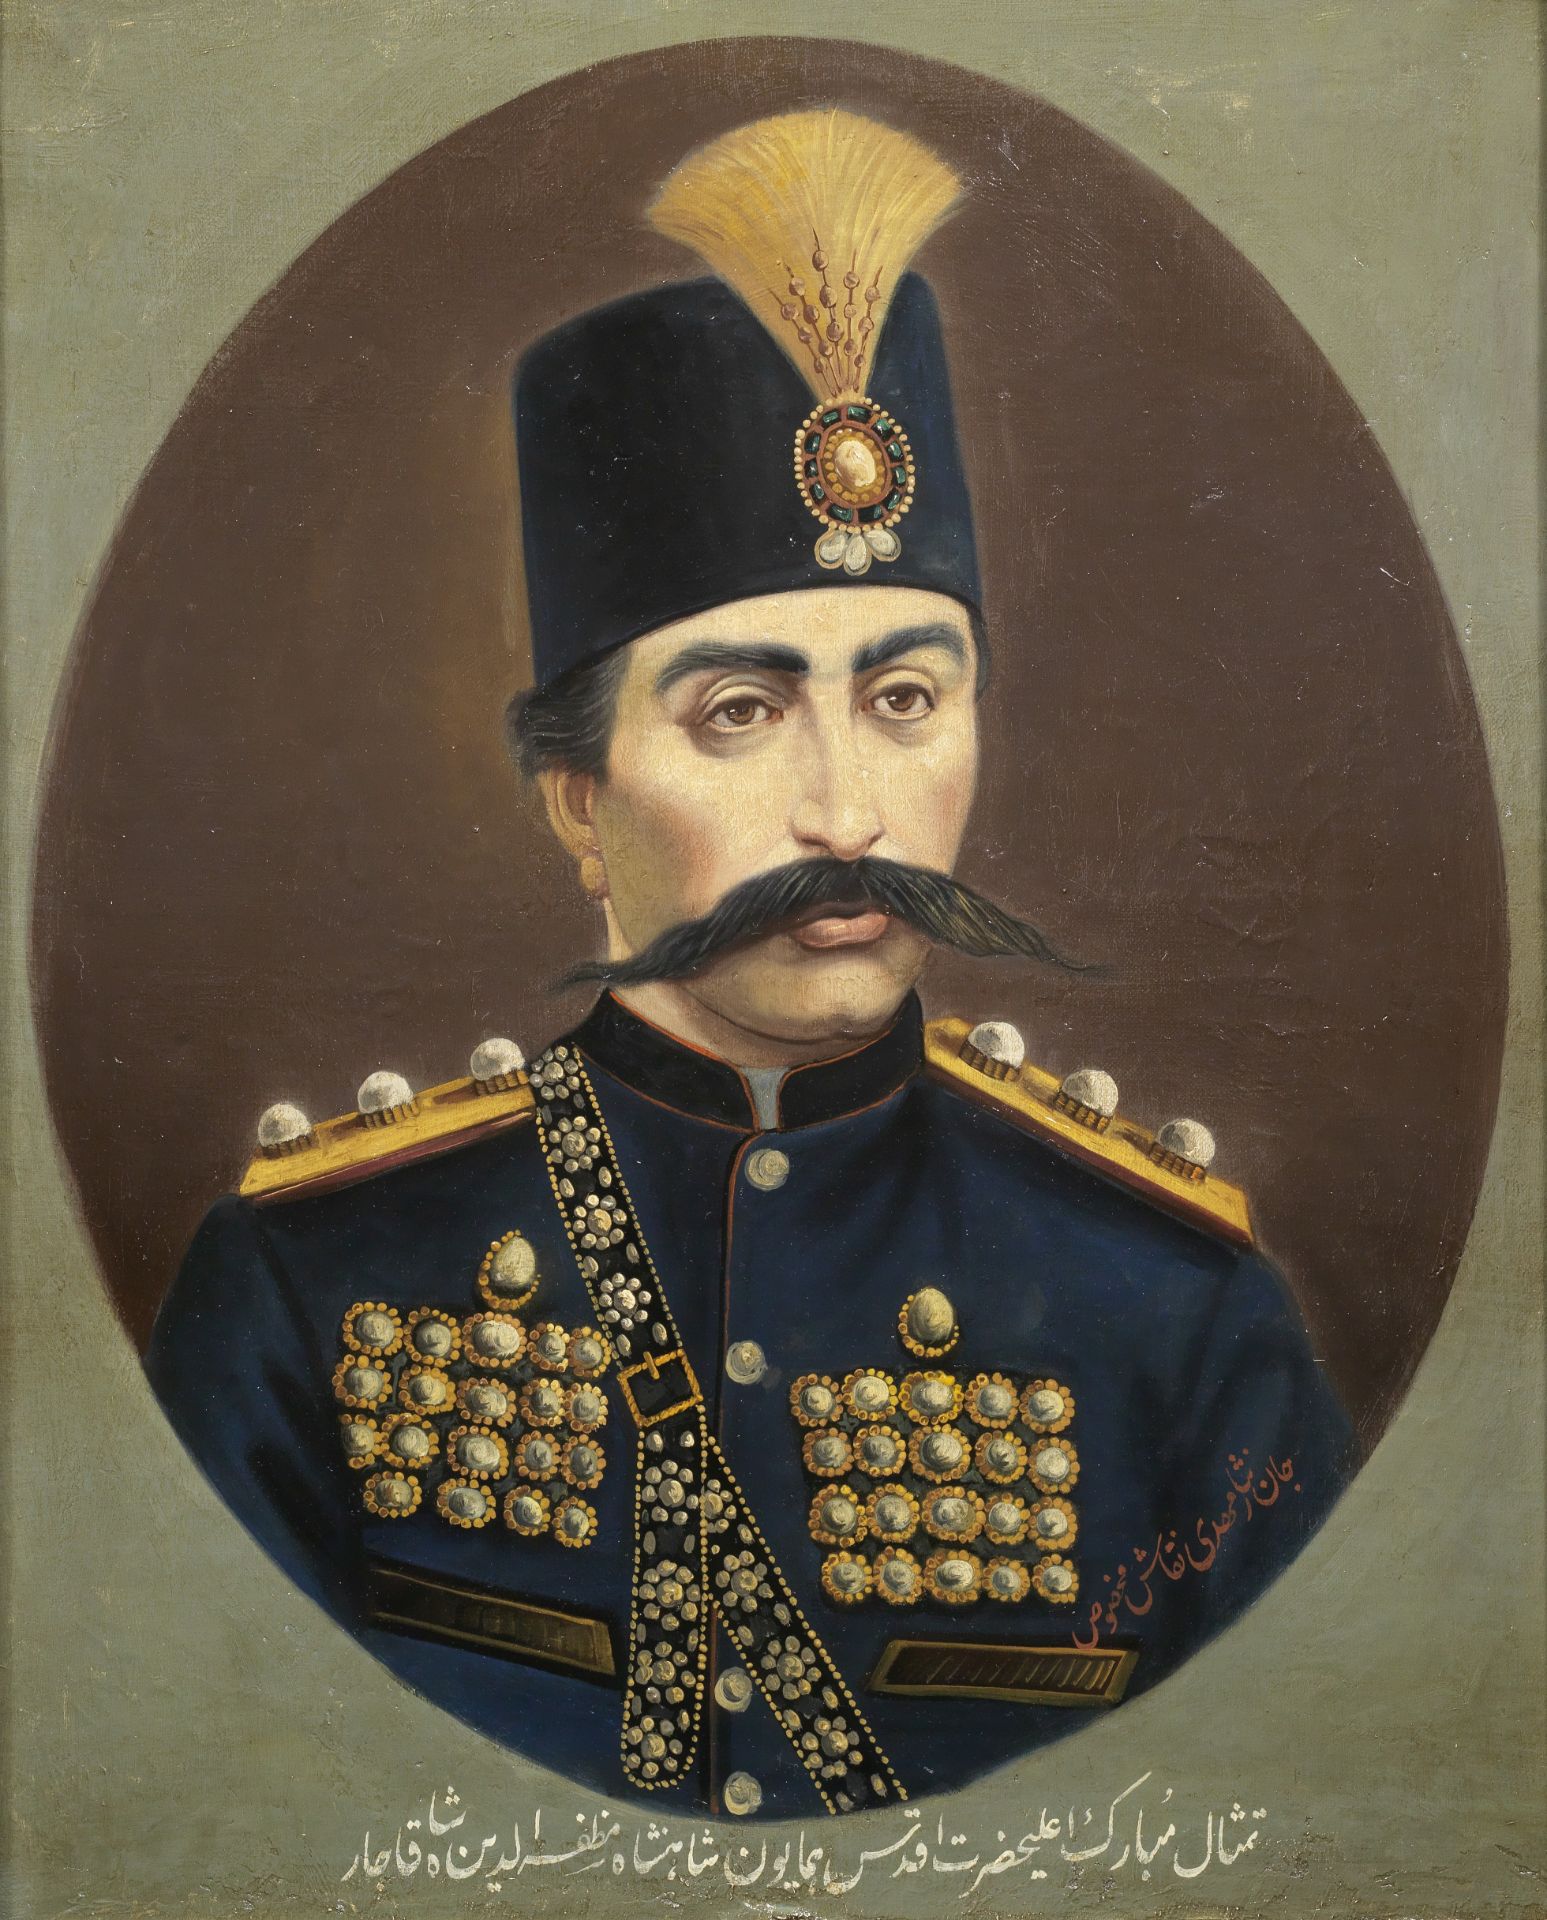 A portrait of Muzaffar al-Din Shah Qajar (reg. 1896-1907) Persia, signed by Mehdi, perhaps the Ro...